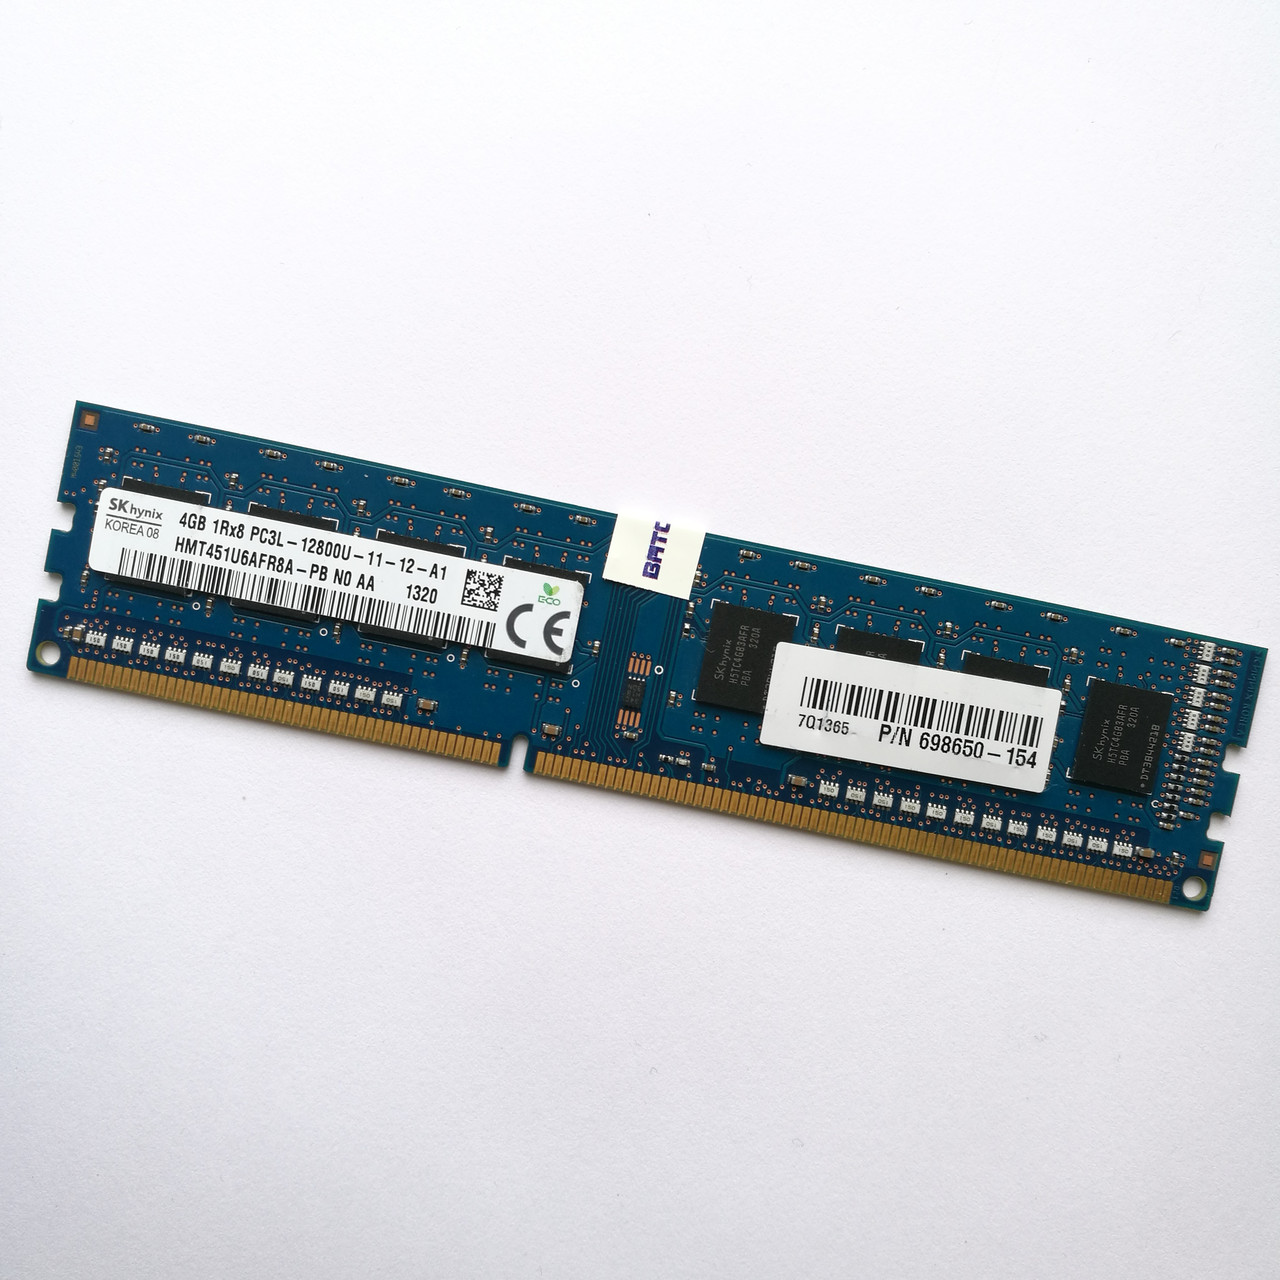 Оперативная память Hynix DDR3L 4Gb 1600MHz PC3L-12800 1R8 CL11 (HMT451U6AFR8A-PB N0 AA) Б/У, фото 1